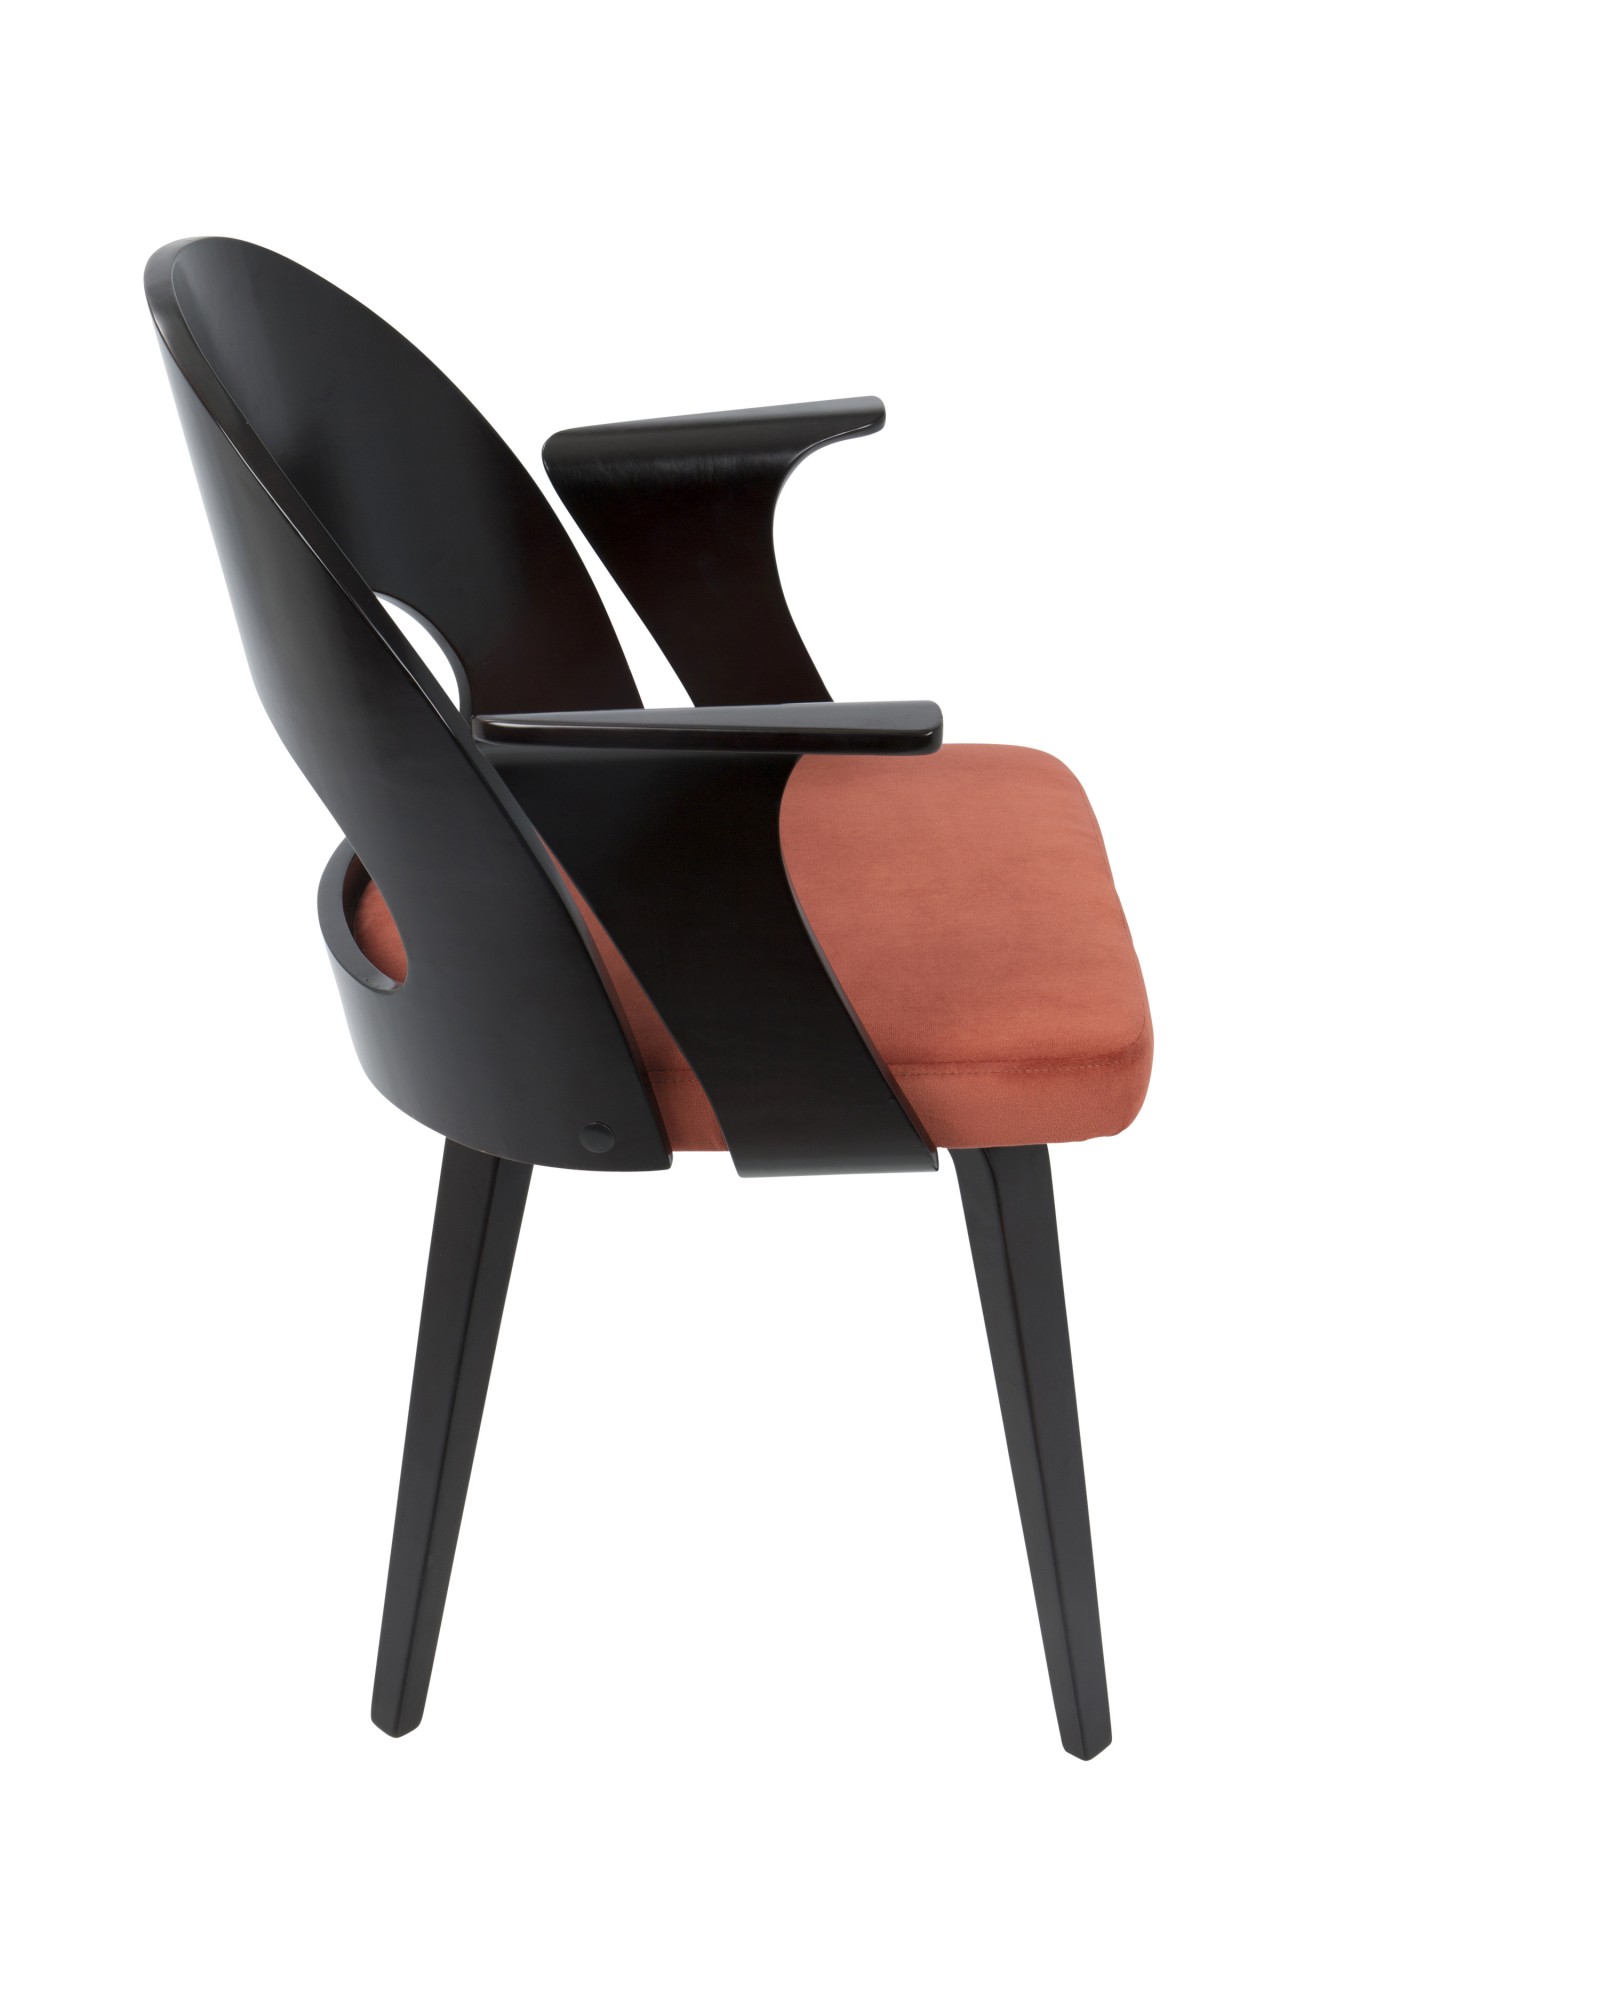 Verino Mid-Century Modern Dining/Accent Chair in Espresso with Orange Velvet